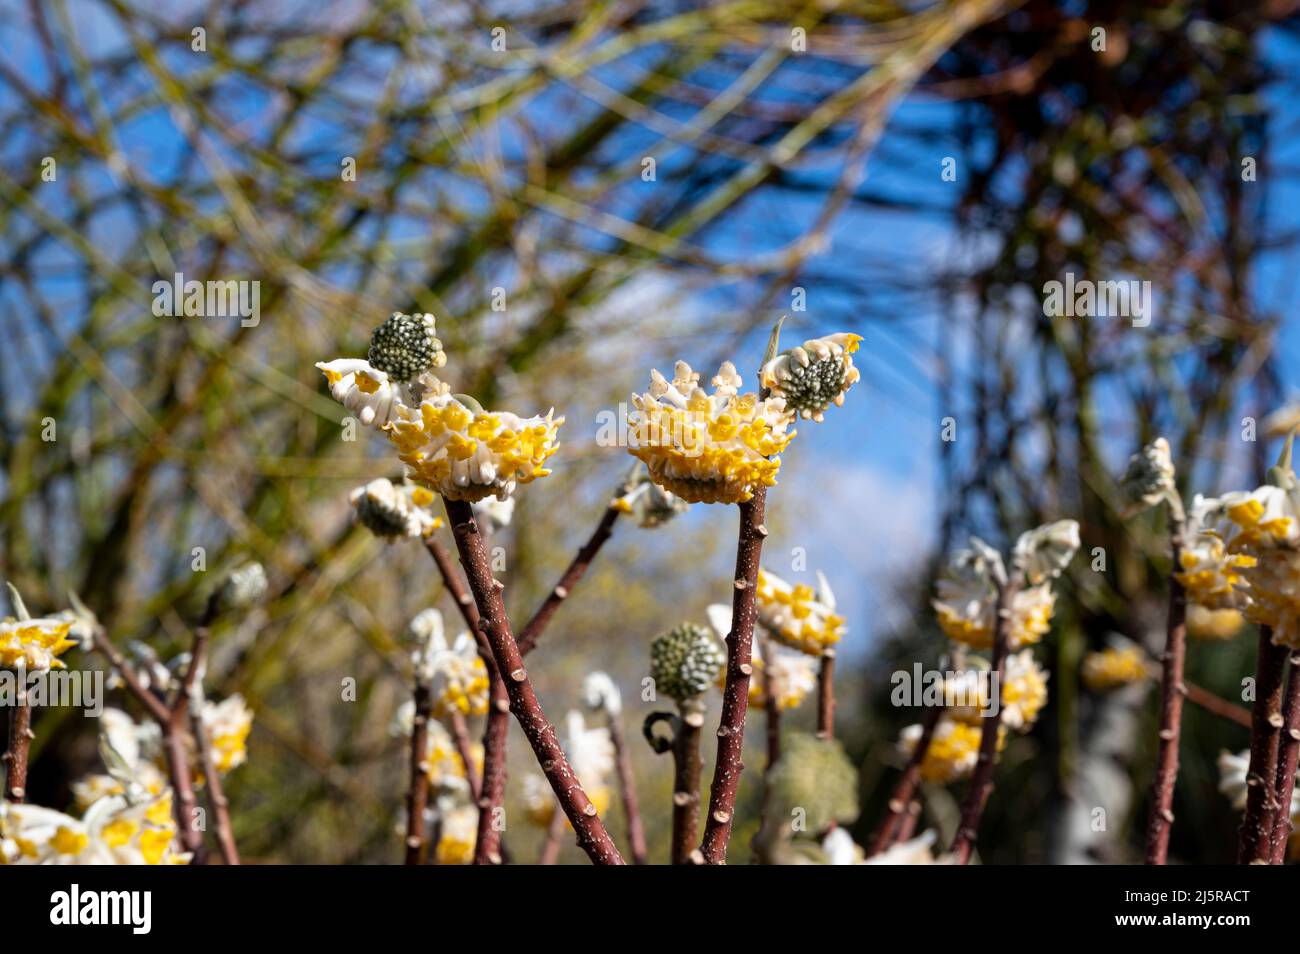 Edgeworthia chrysantha grandiflora, Paperbush grandiflora, Edgeworthia grandiflora, Thymelaeaceae. Flores de color crema a principios de la primavera. Foto de stock